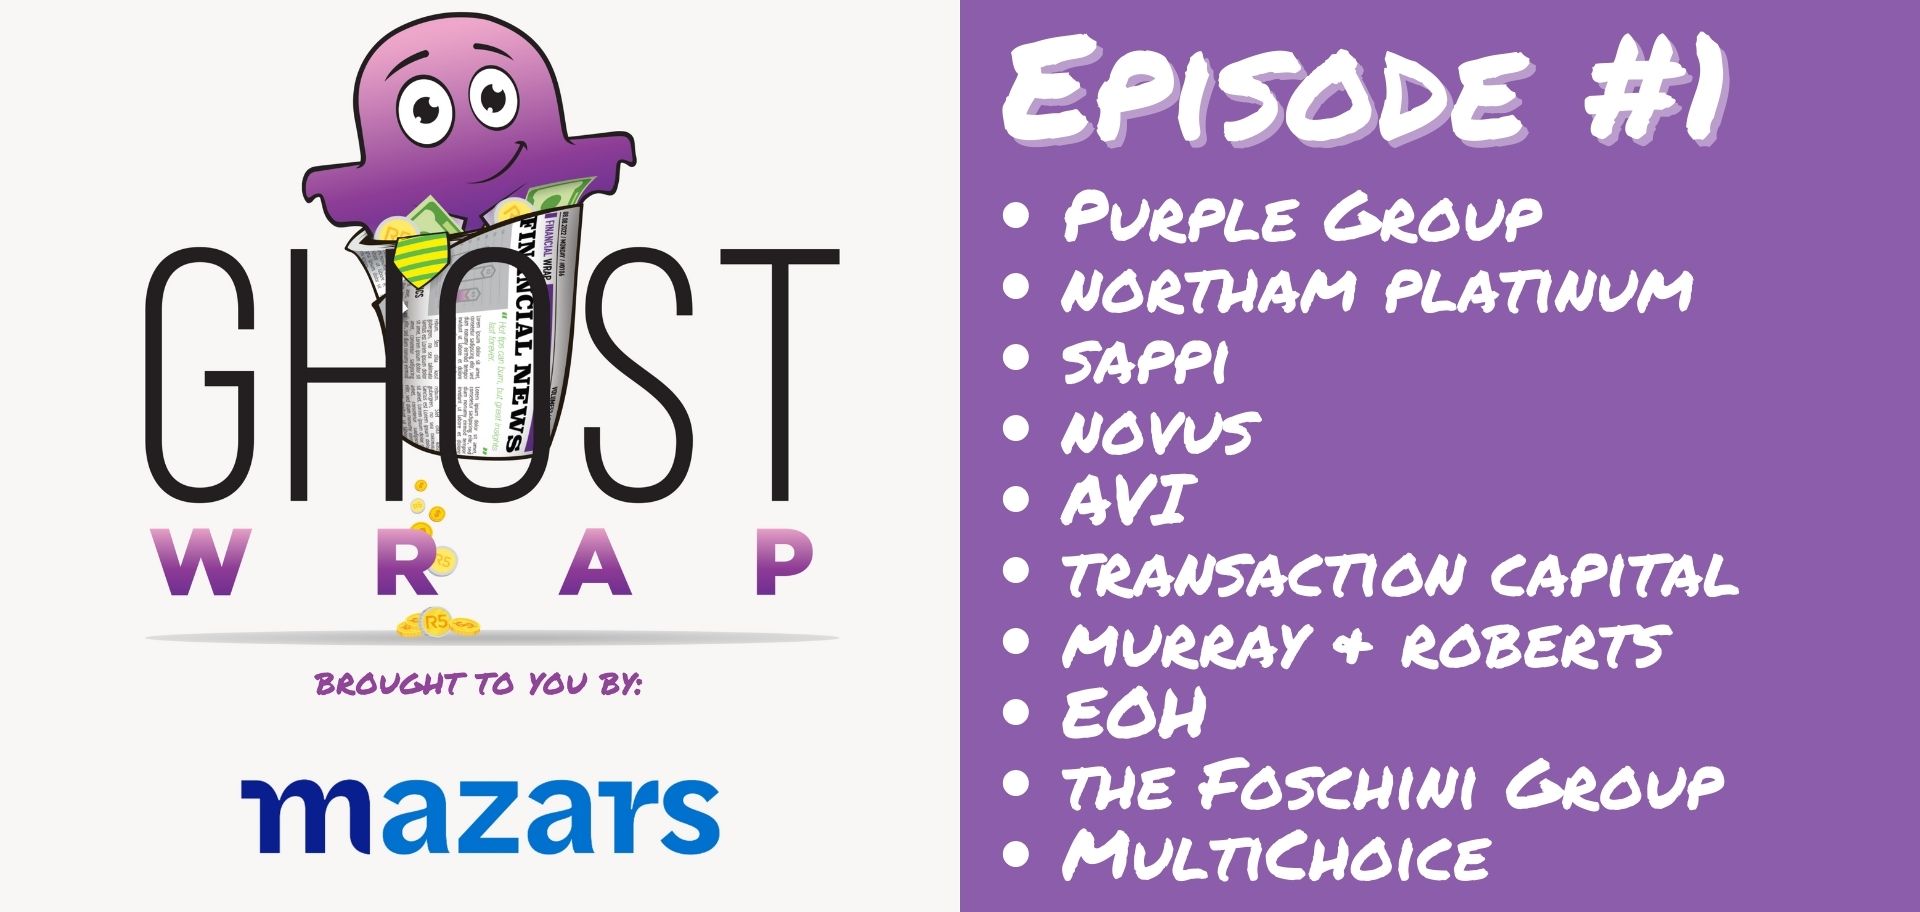 Ghost Wrap #1 (Purple | Northam | Sappi | Novus | AVI | Transaction Capital | MUR | EOH | Foschini | MultiChoice)